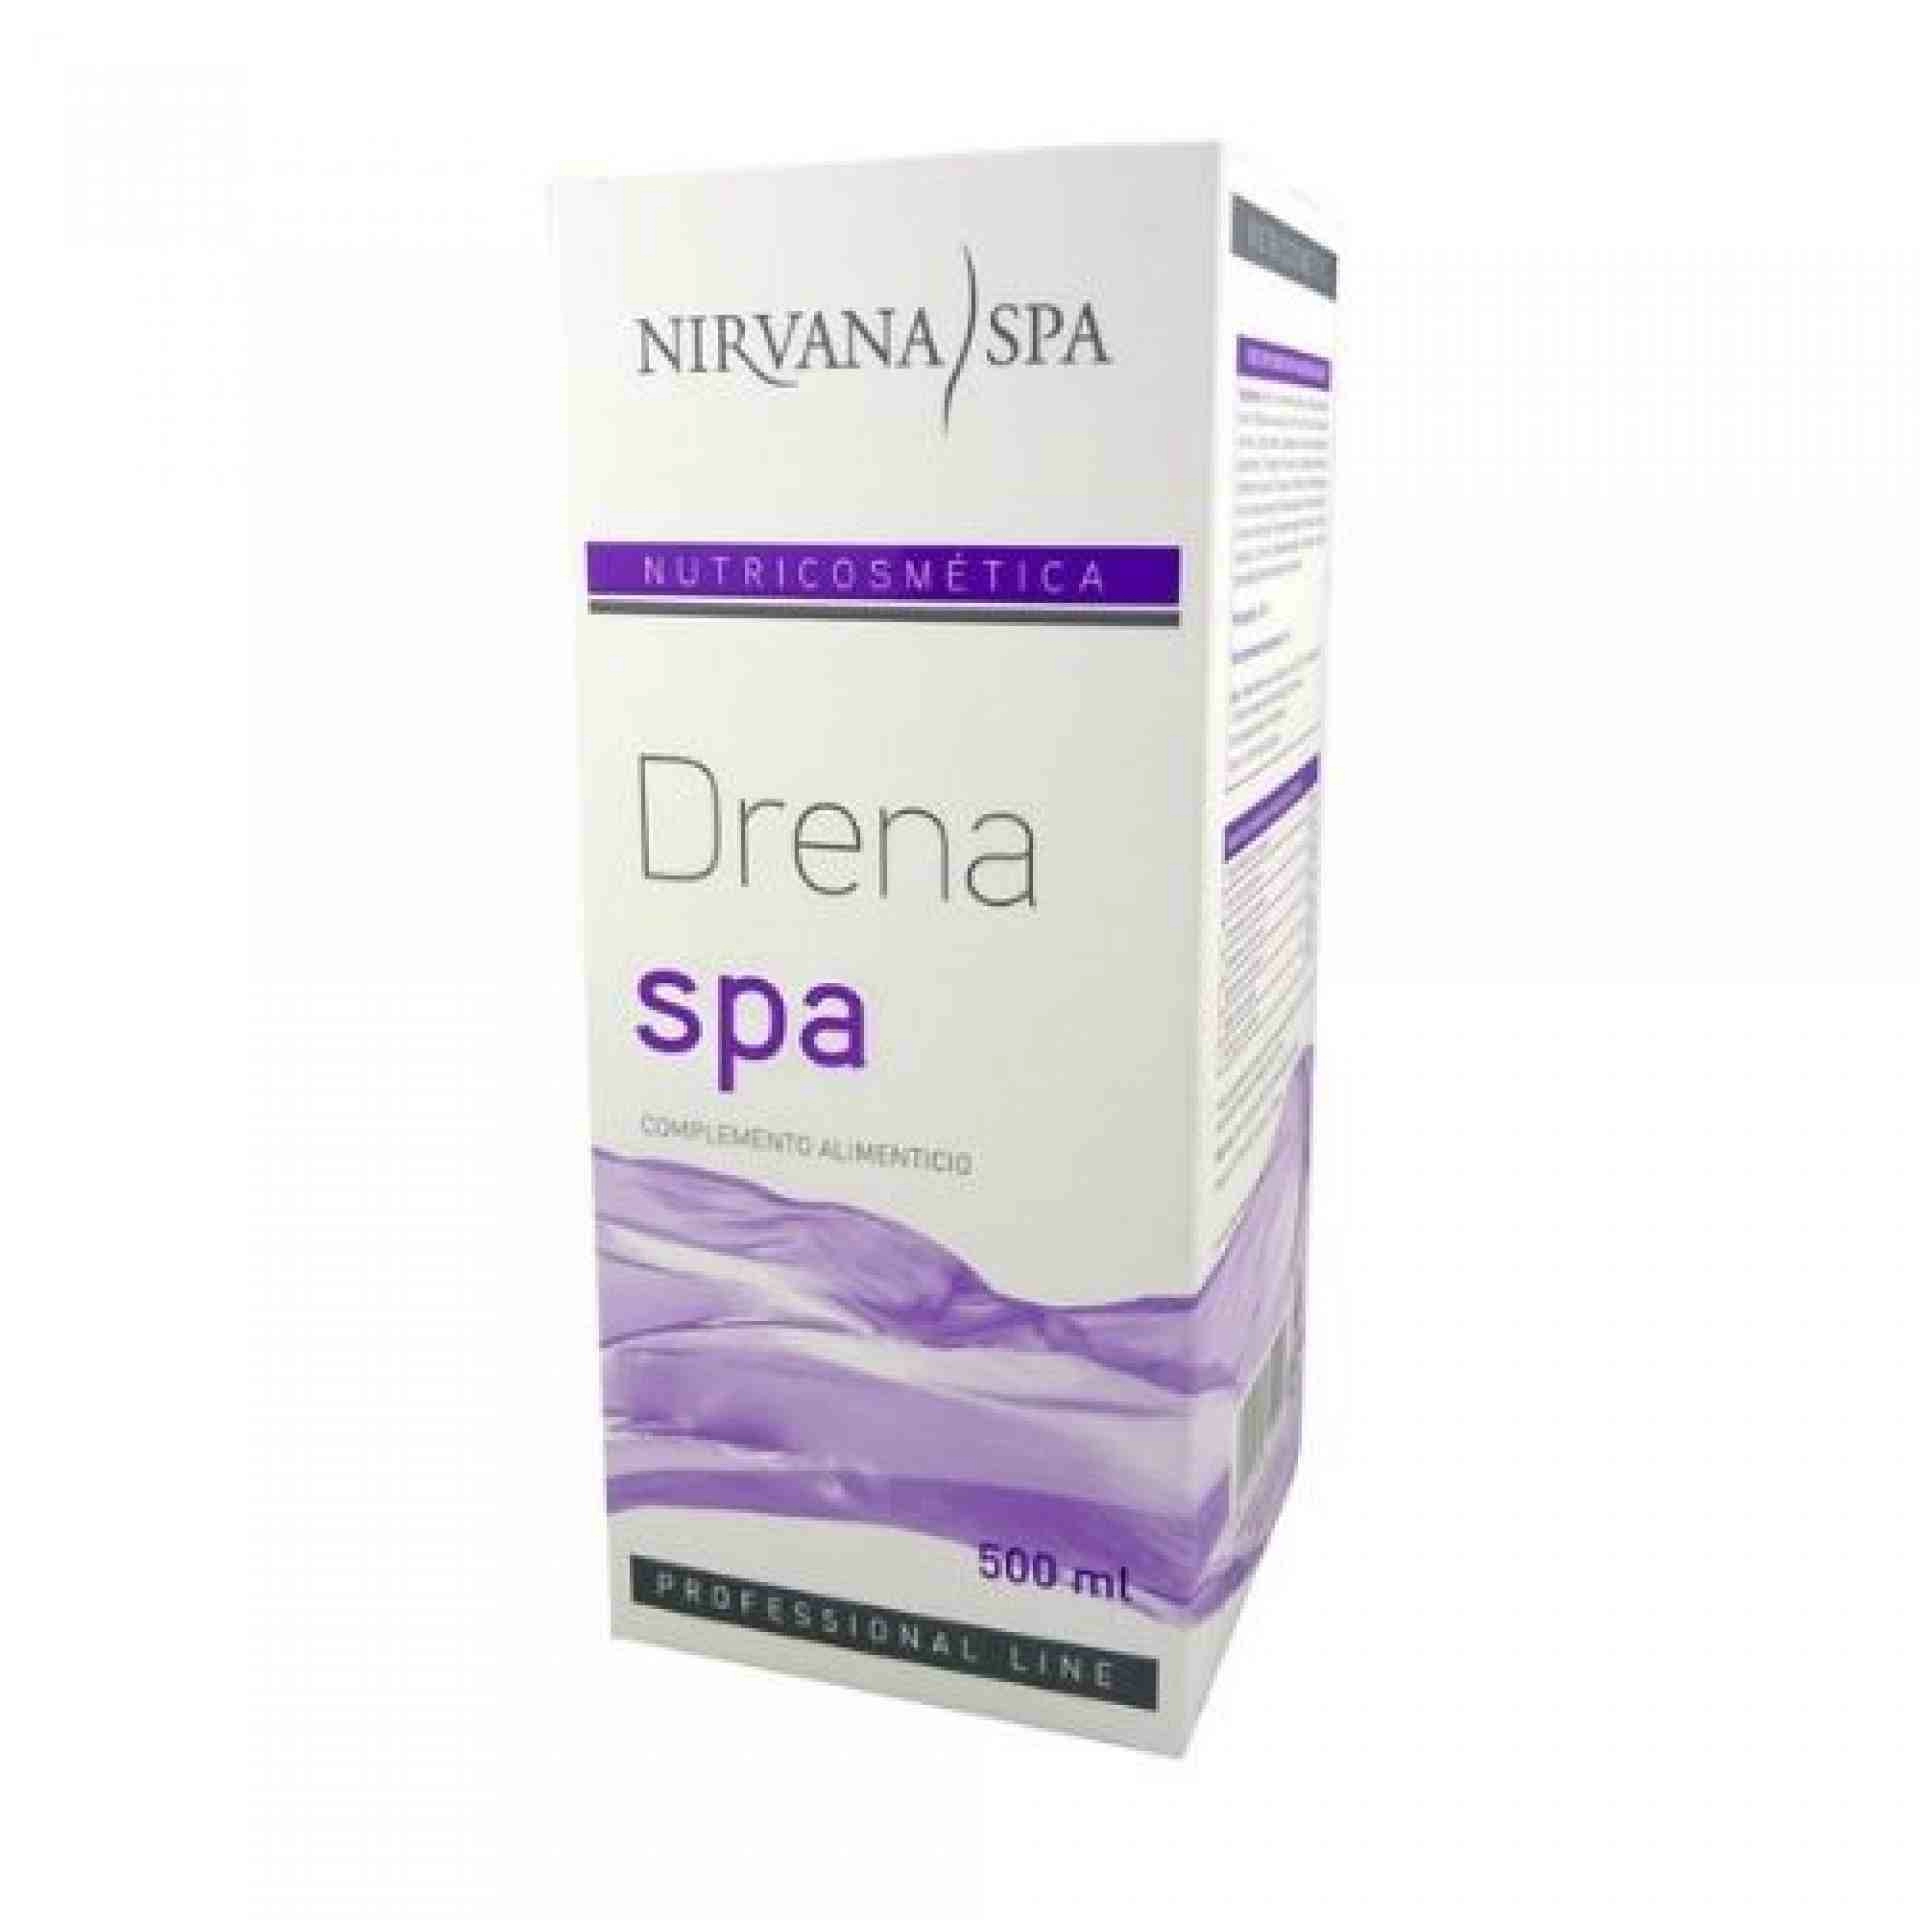 Drena Spa | Complemento alimenticio 500ml - Nutricosmética - Nirvana Spa ®